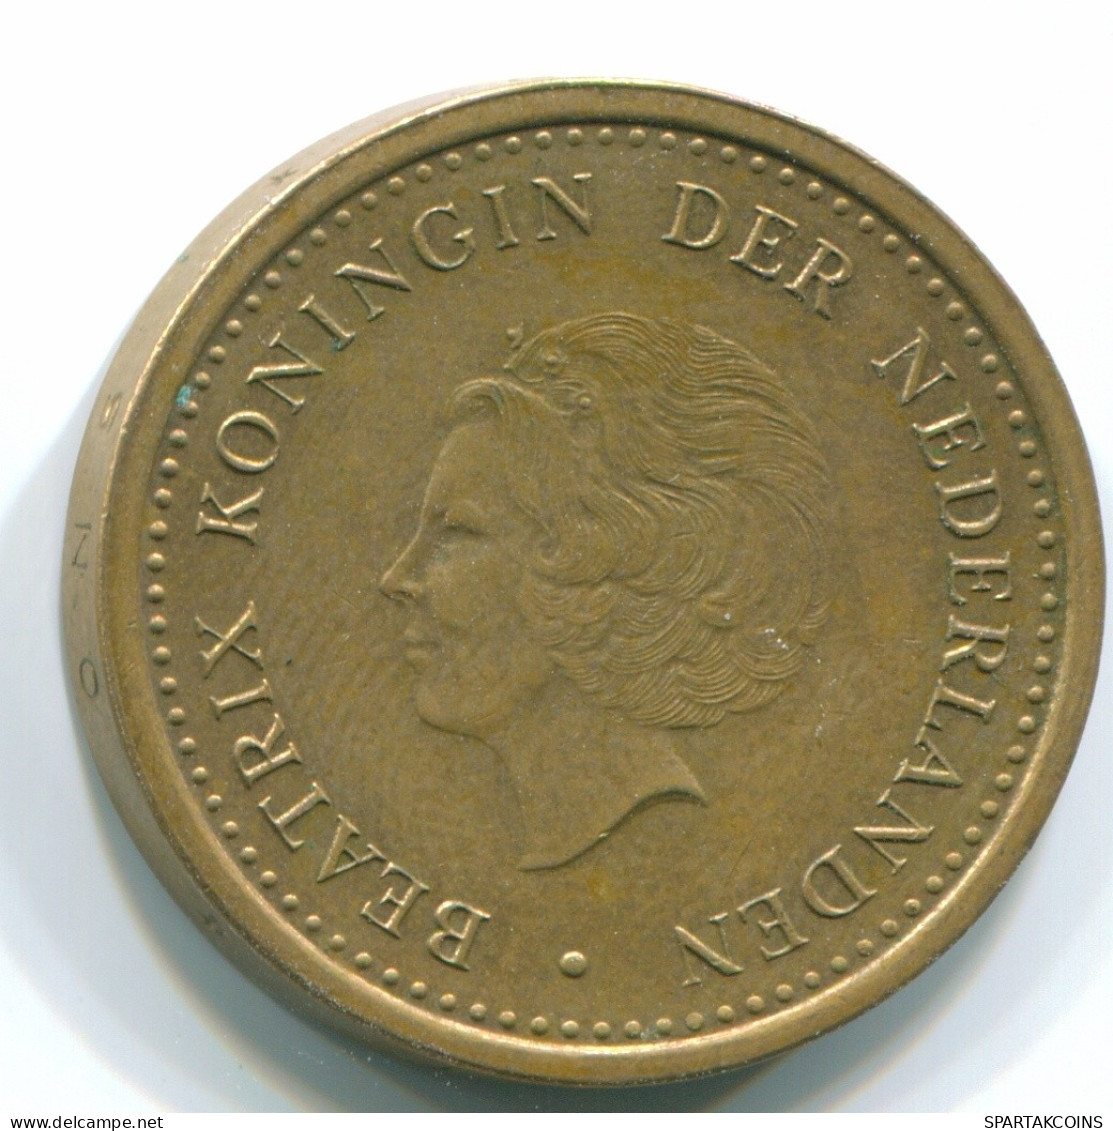 1 GULDEN 1993 NETHERLANDS ANTILLES Aureate Steel Colonial Coin #S12158.U.A - Netherlands Antilles